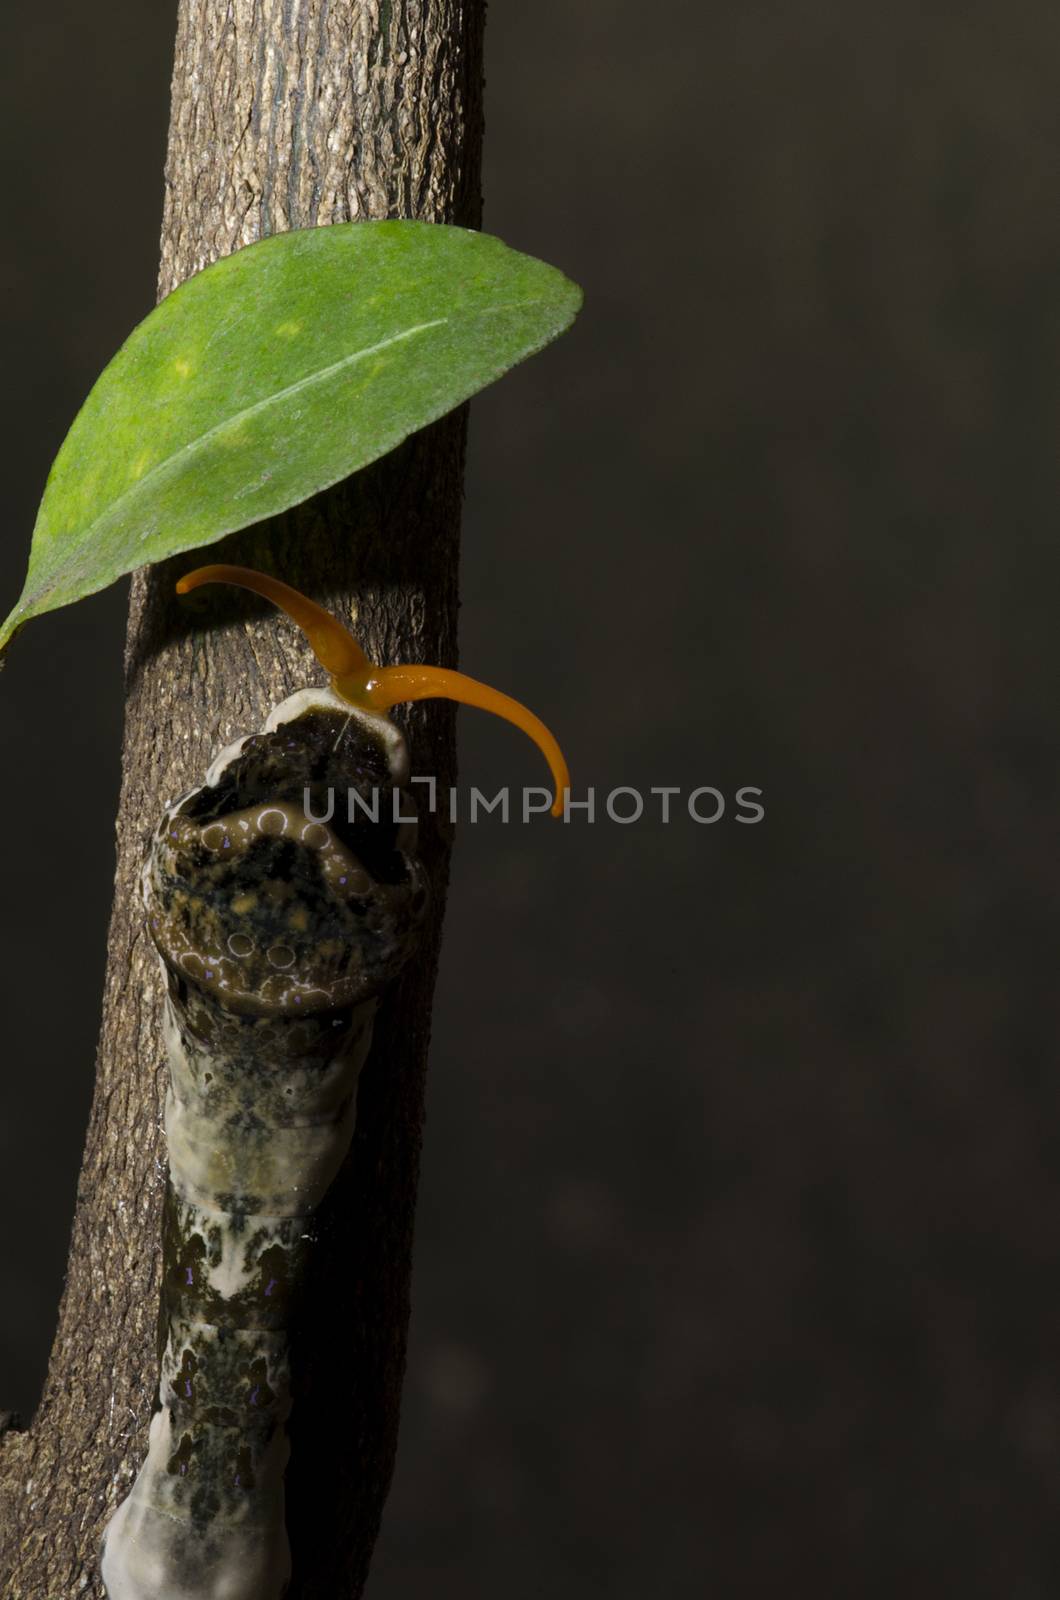 Orange Dog Caterpillar by rodrigobellizzi